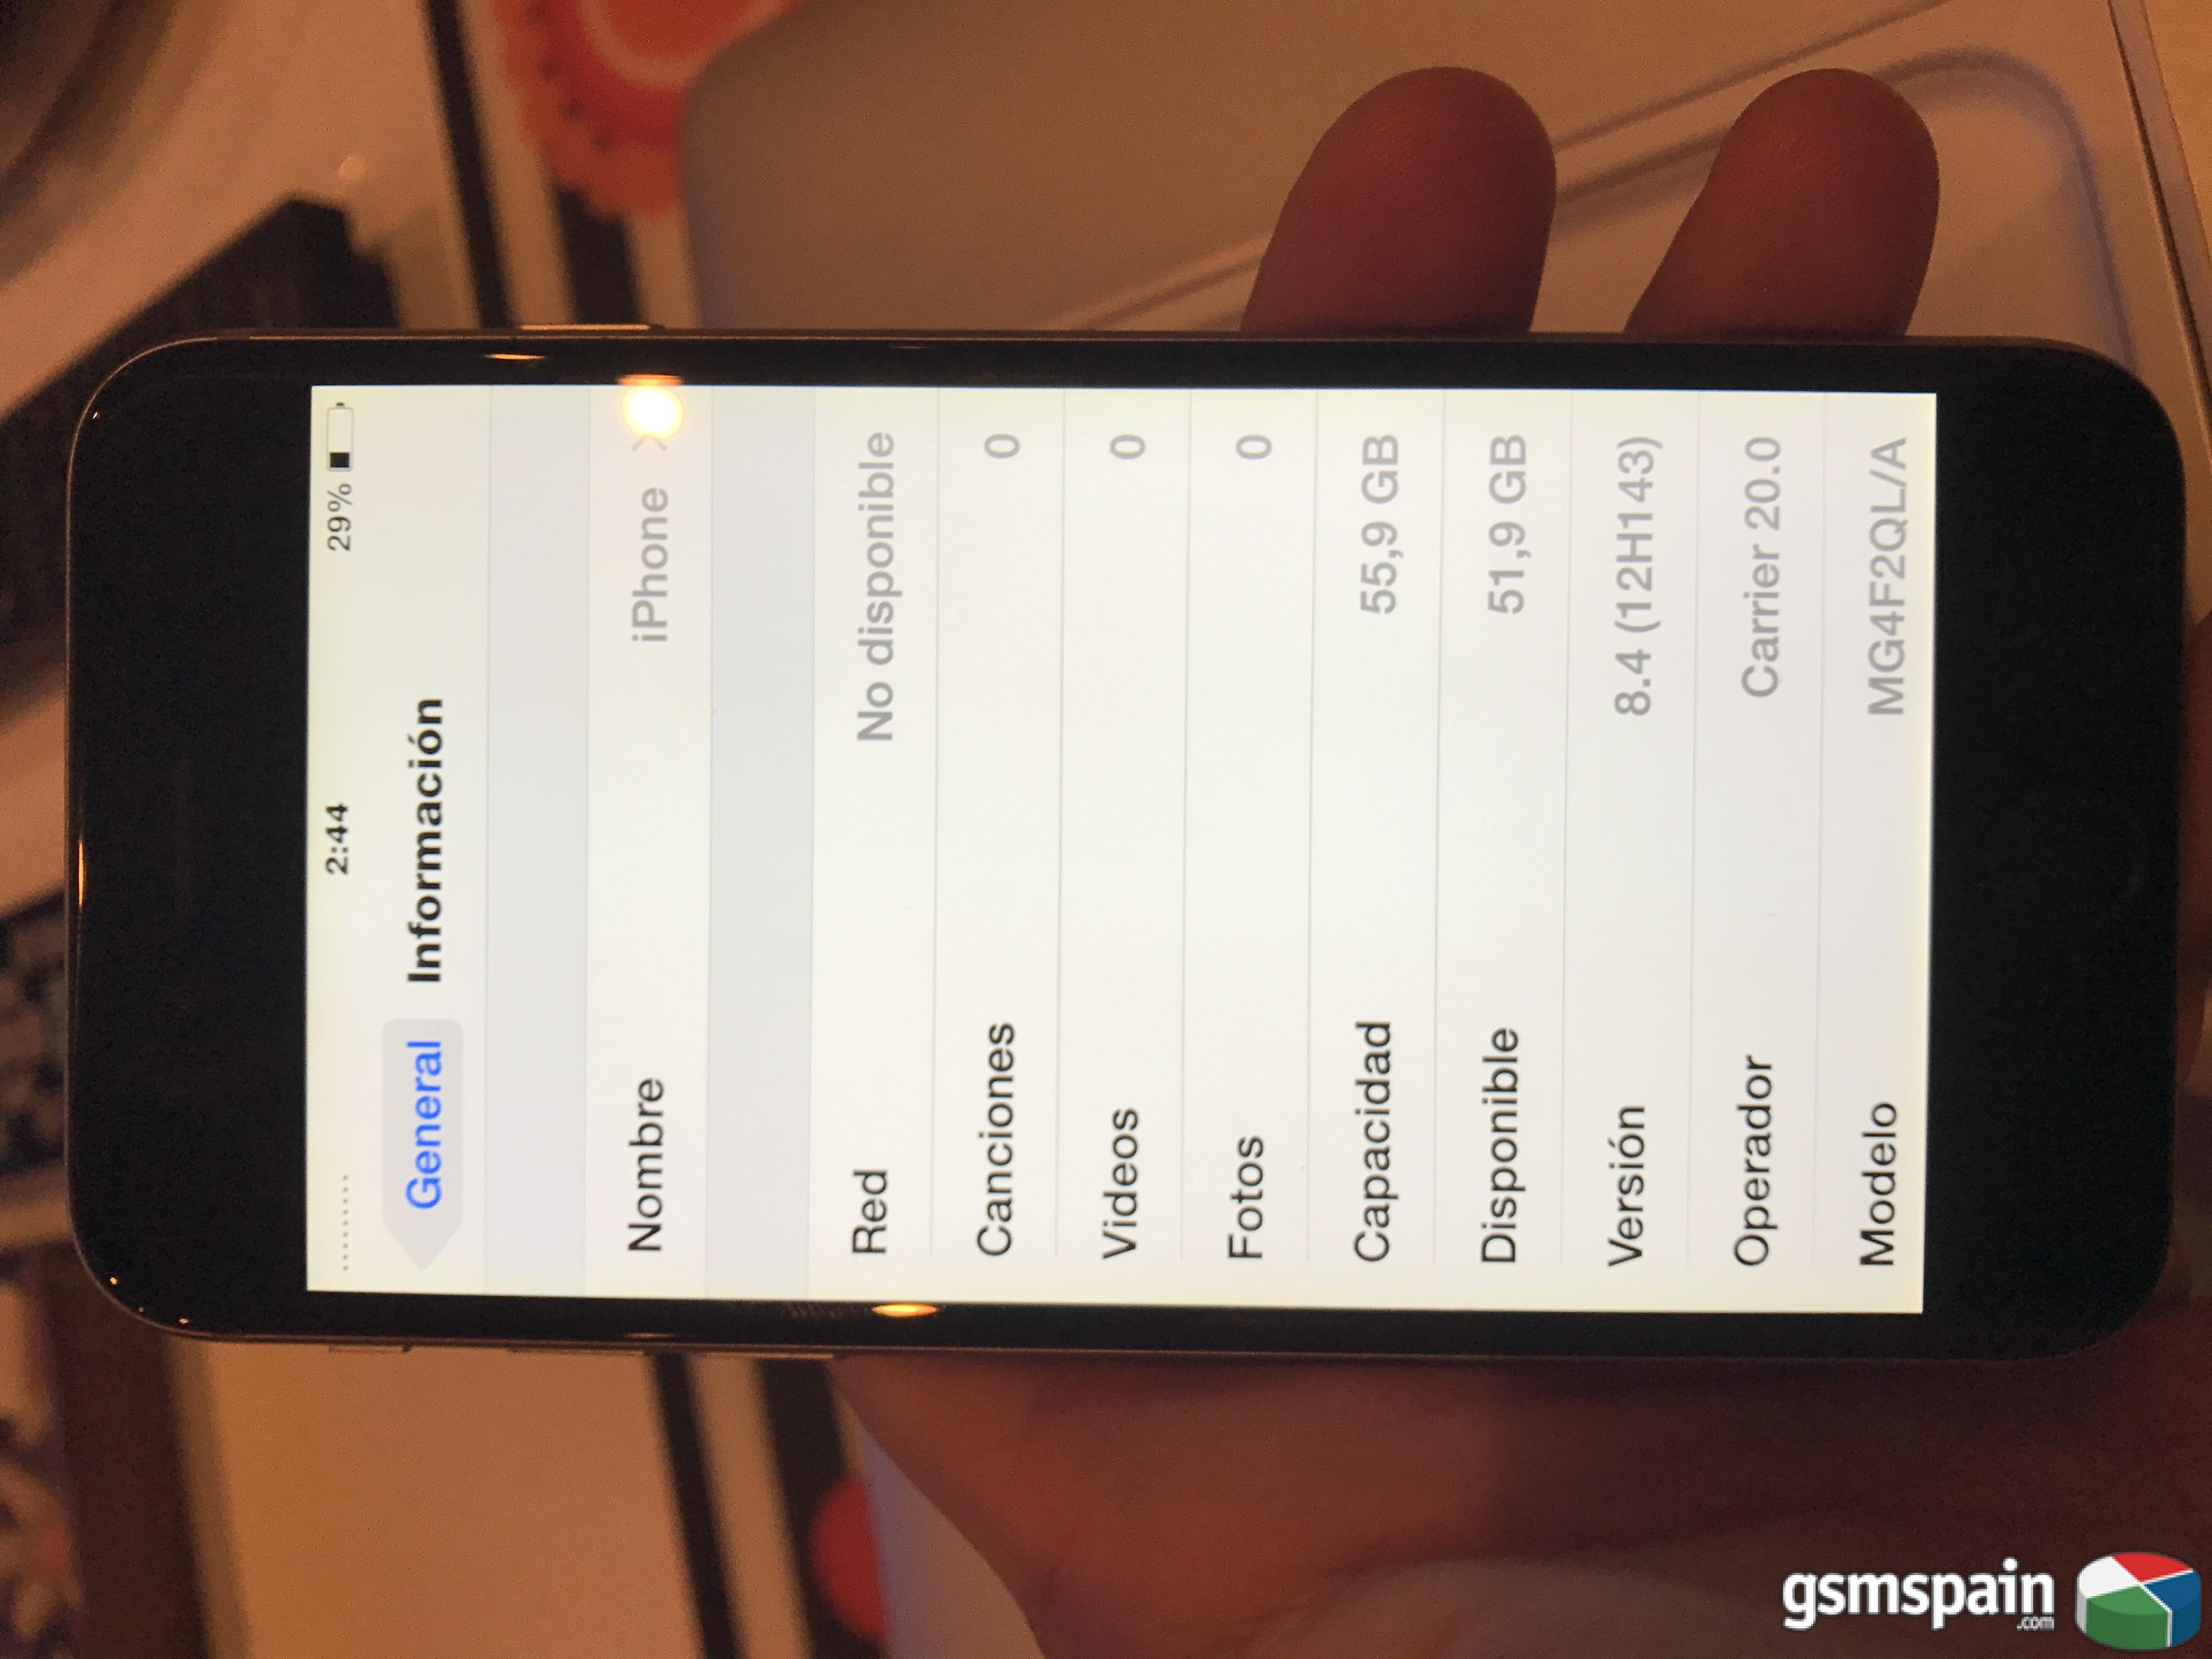 [vendo] Iphone 6 64g SPACE GREY    IOS 8.4